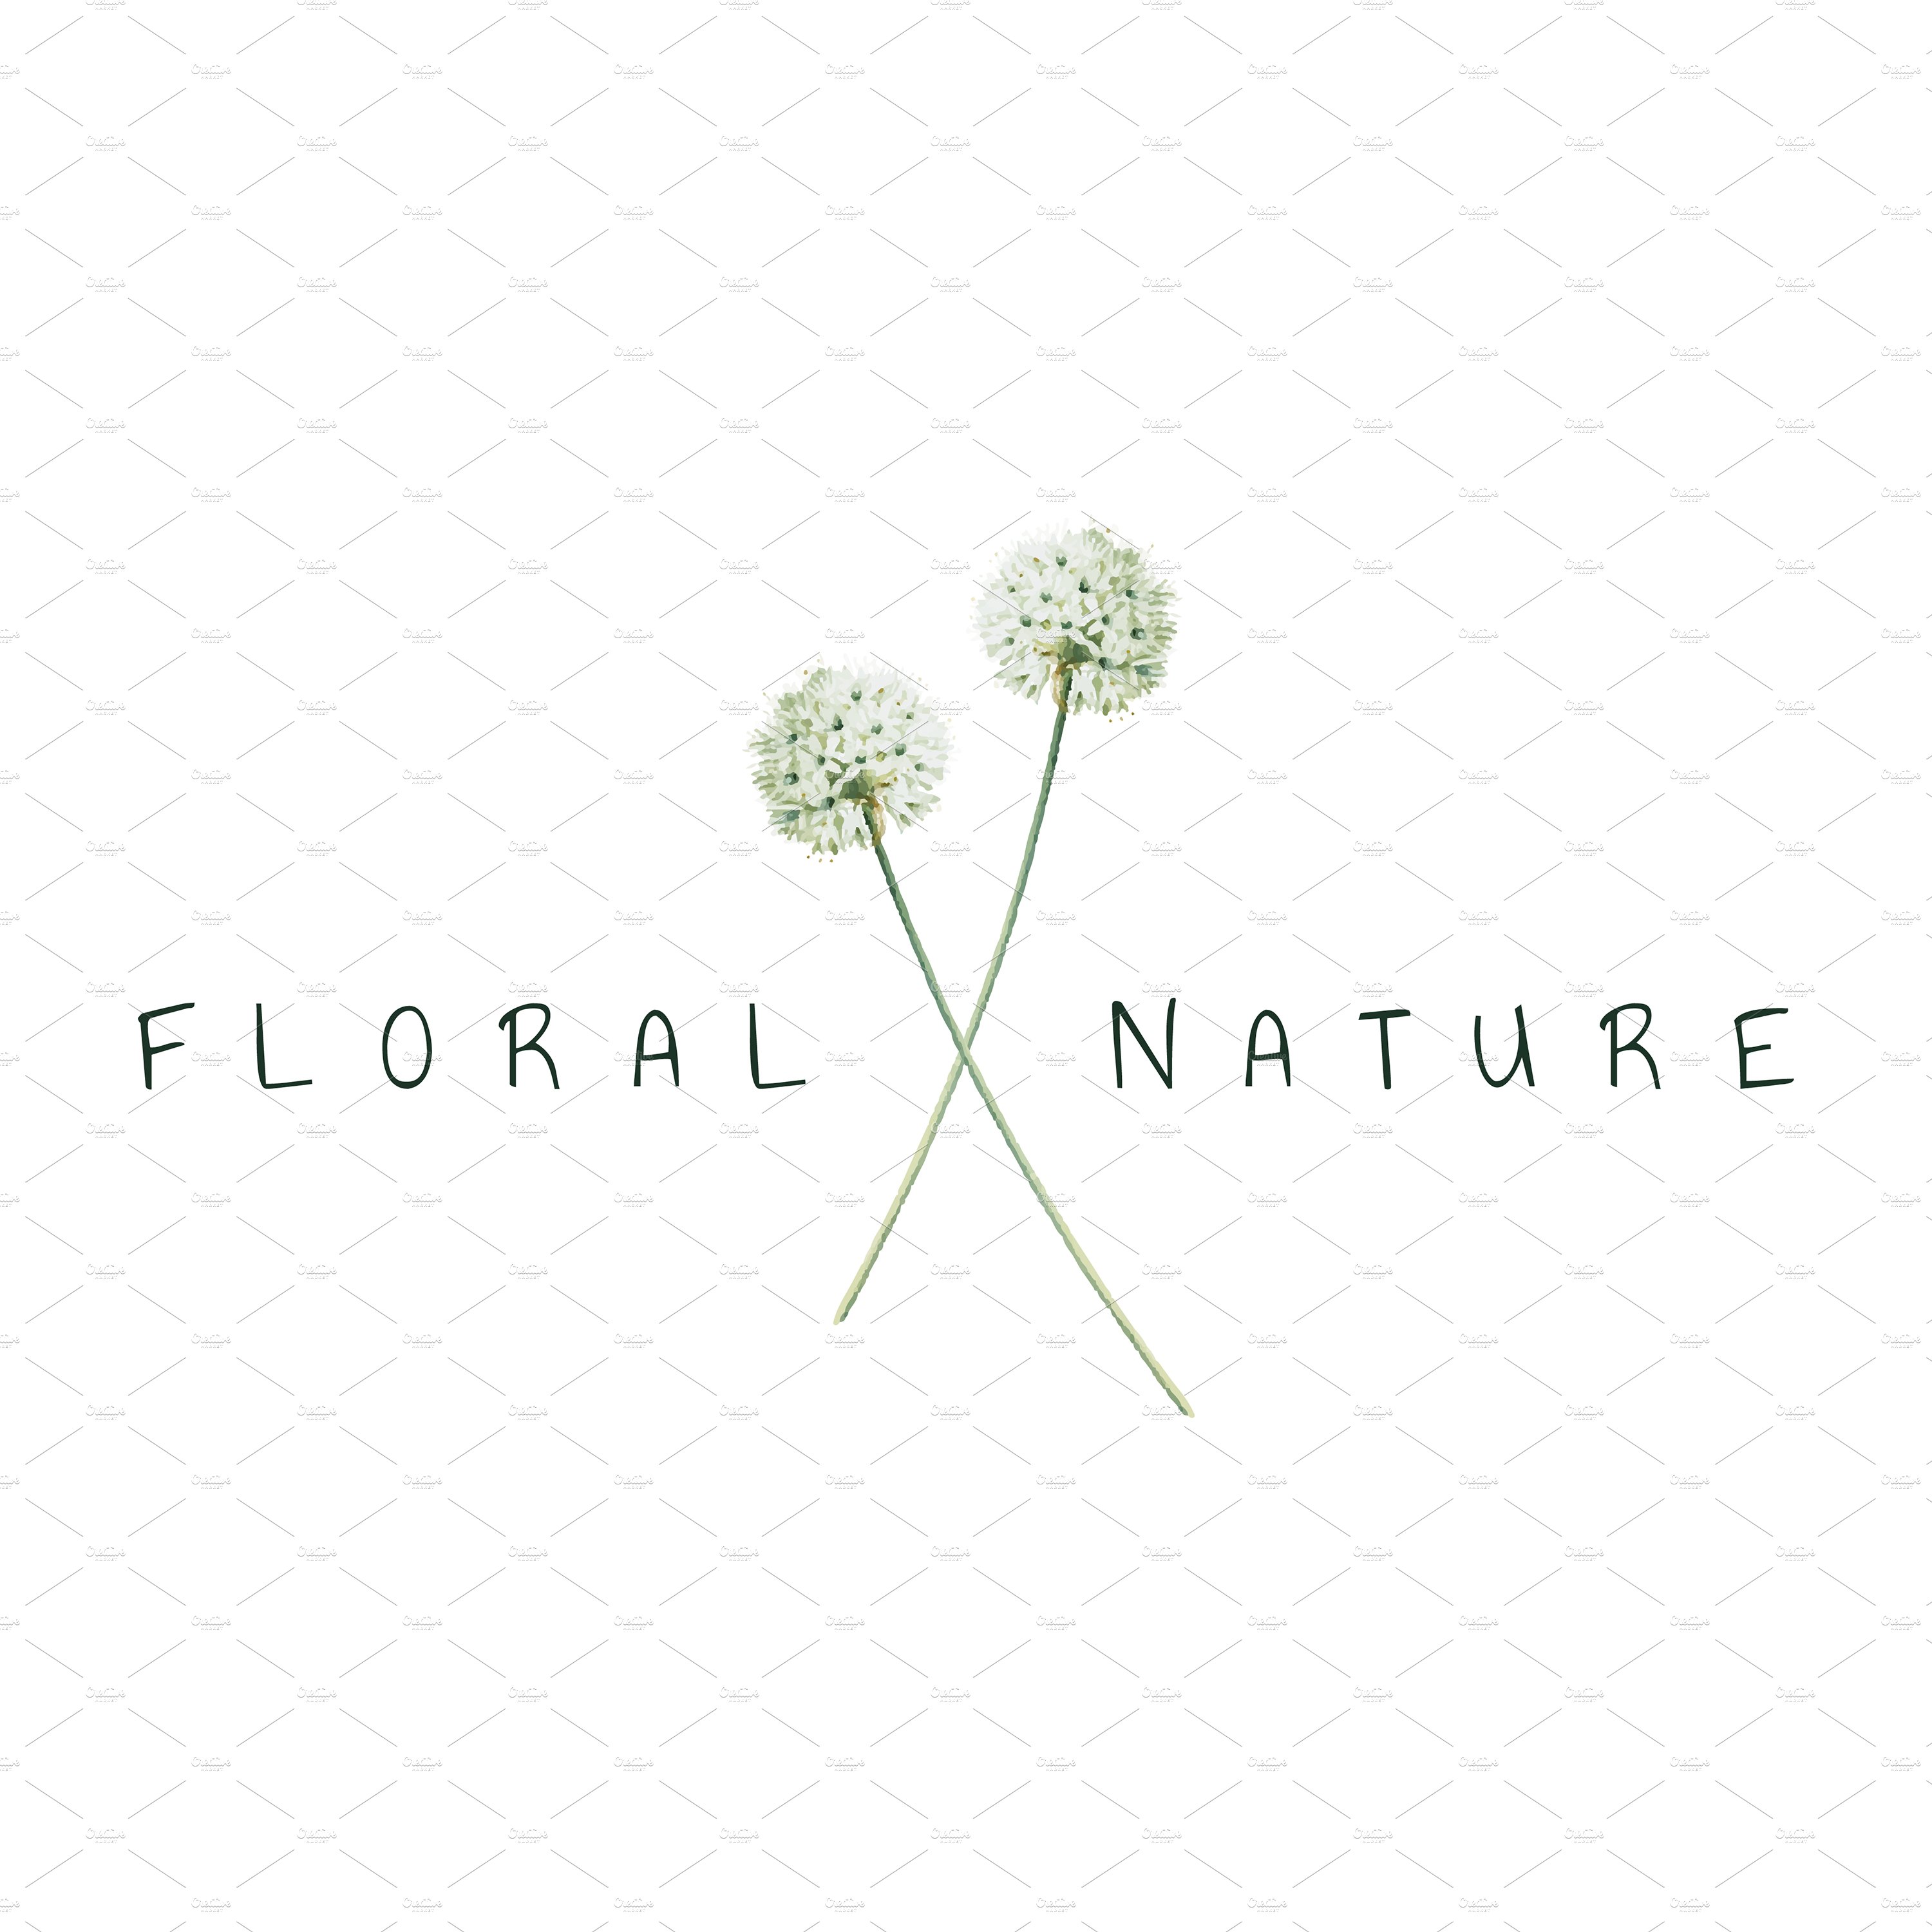 Floral nature logo design vector cover image.